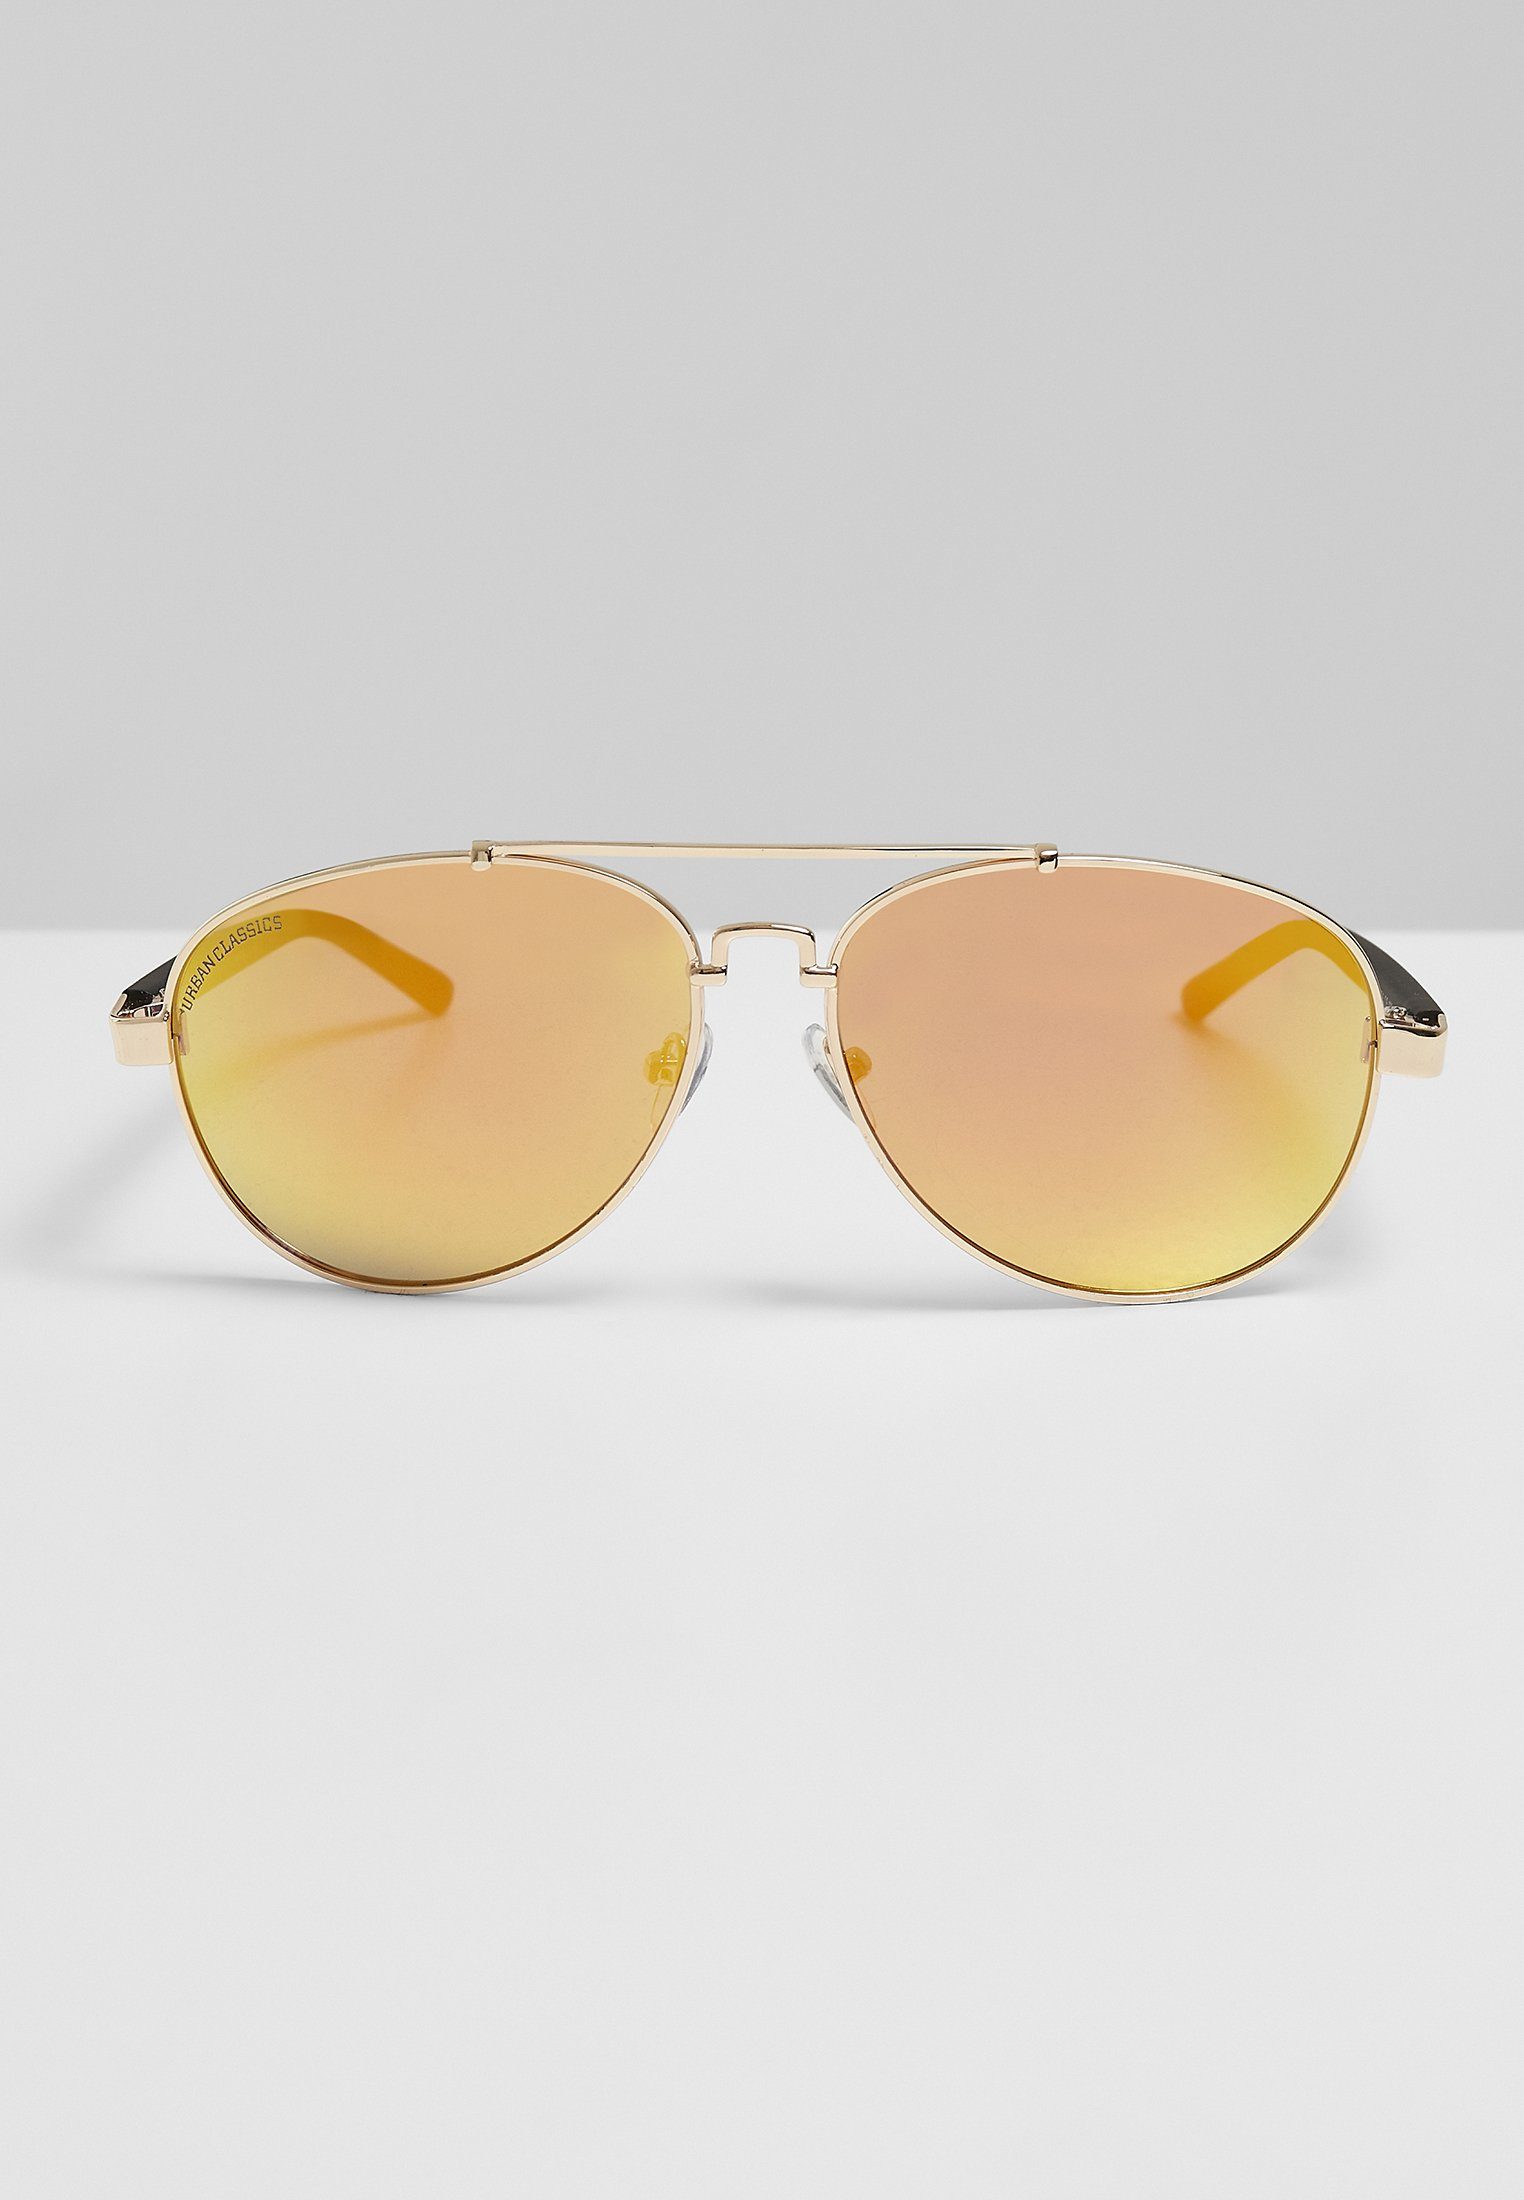 Mumbo CLASSICS UC Mirror Sunglasses Accessoires gold/orange URBAN Sonnenbrille